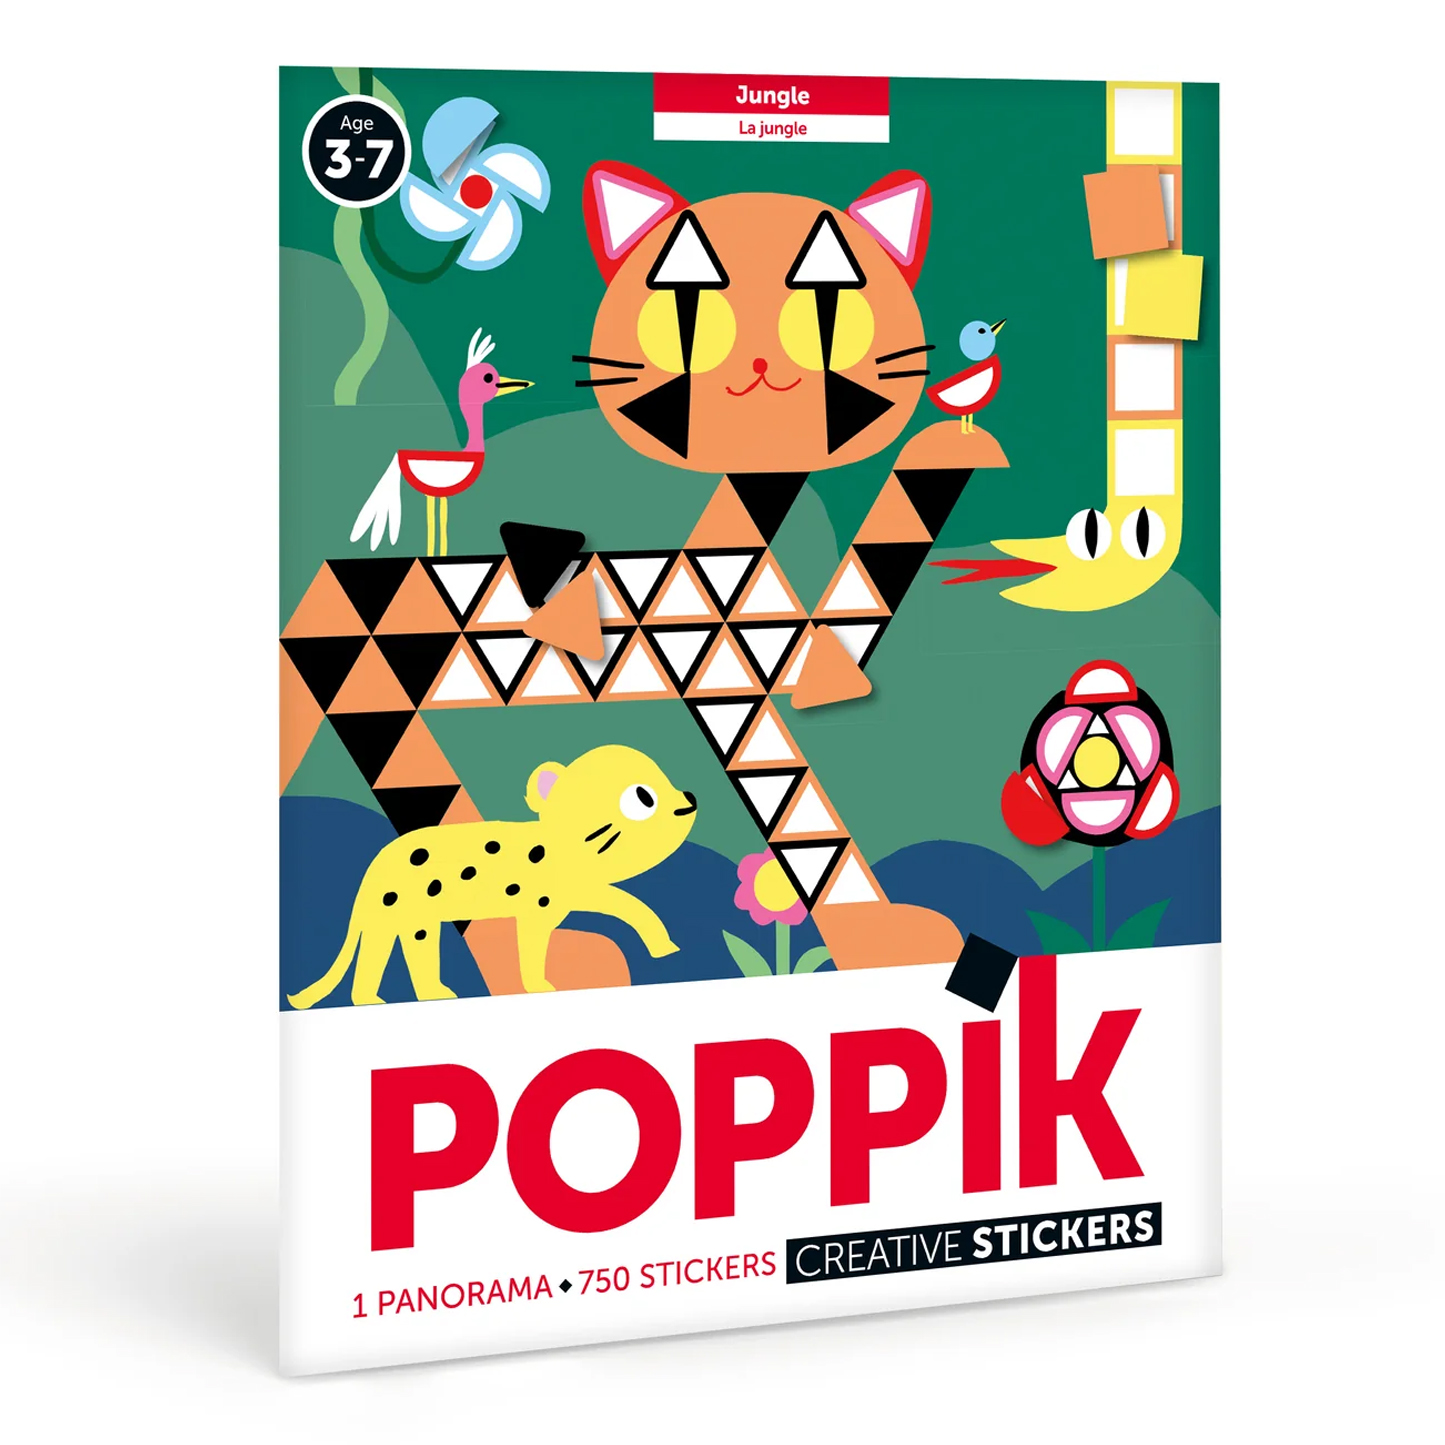 POPPIK Poppik Panorama Sticker Poster - Jungle